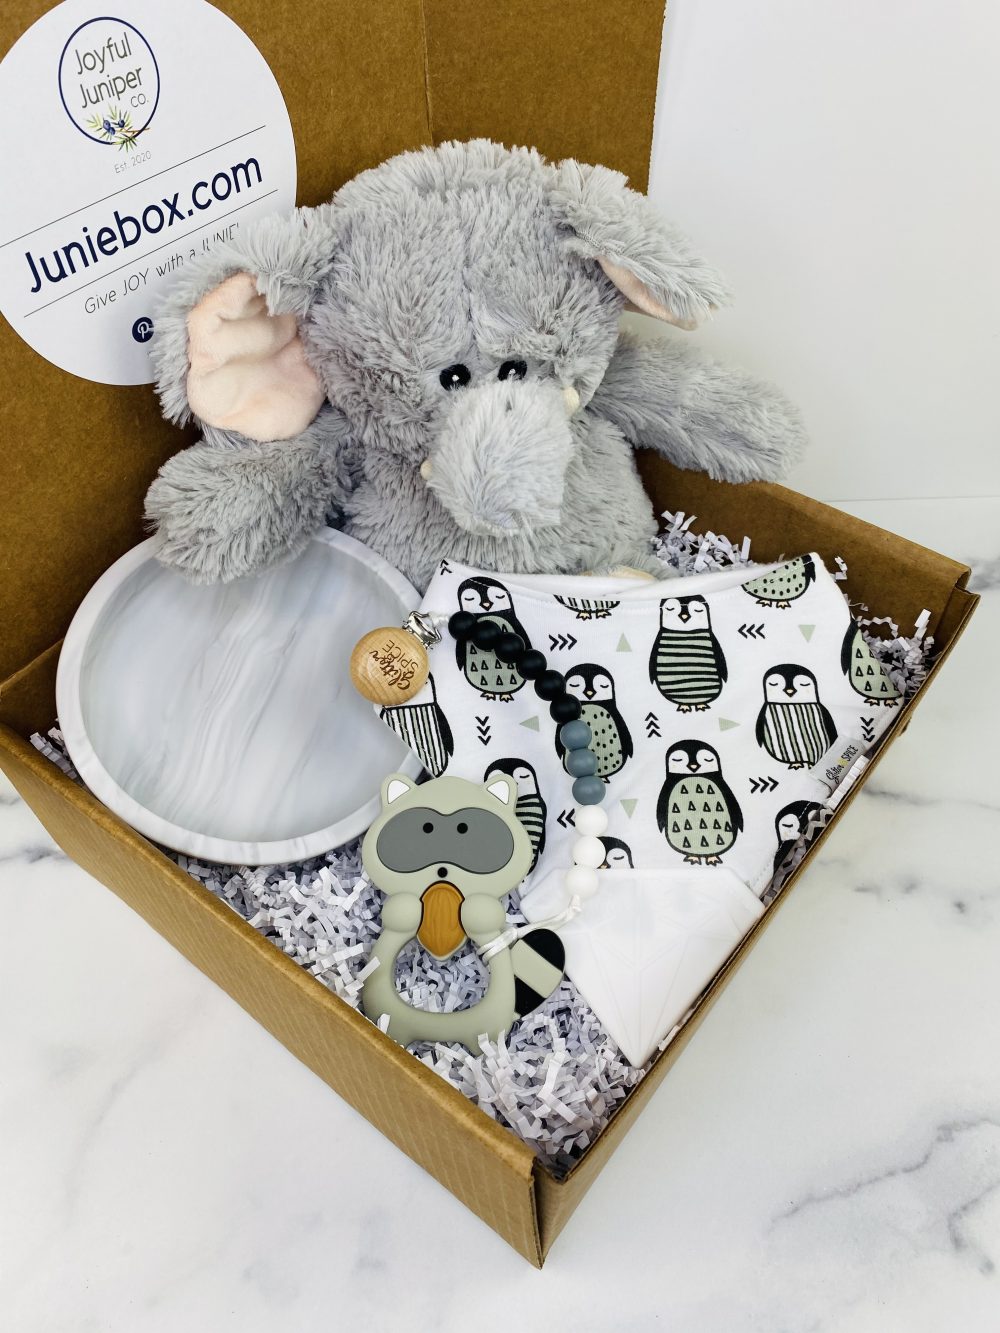 The Elephant Baby Box